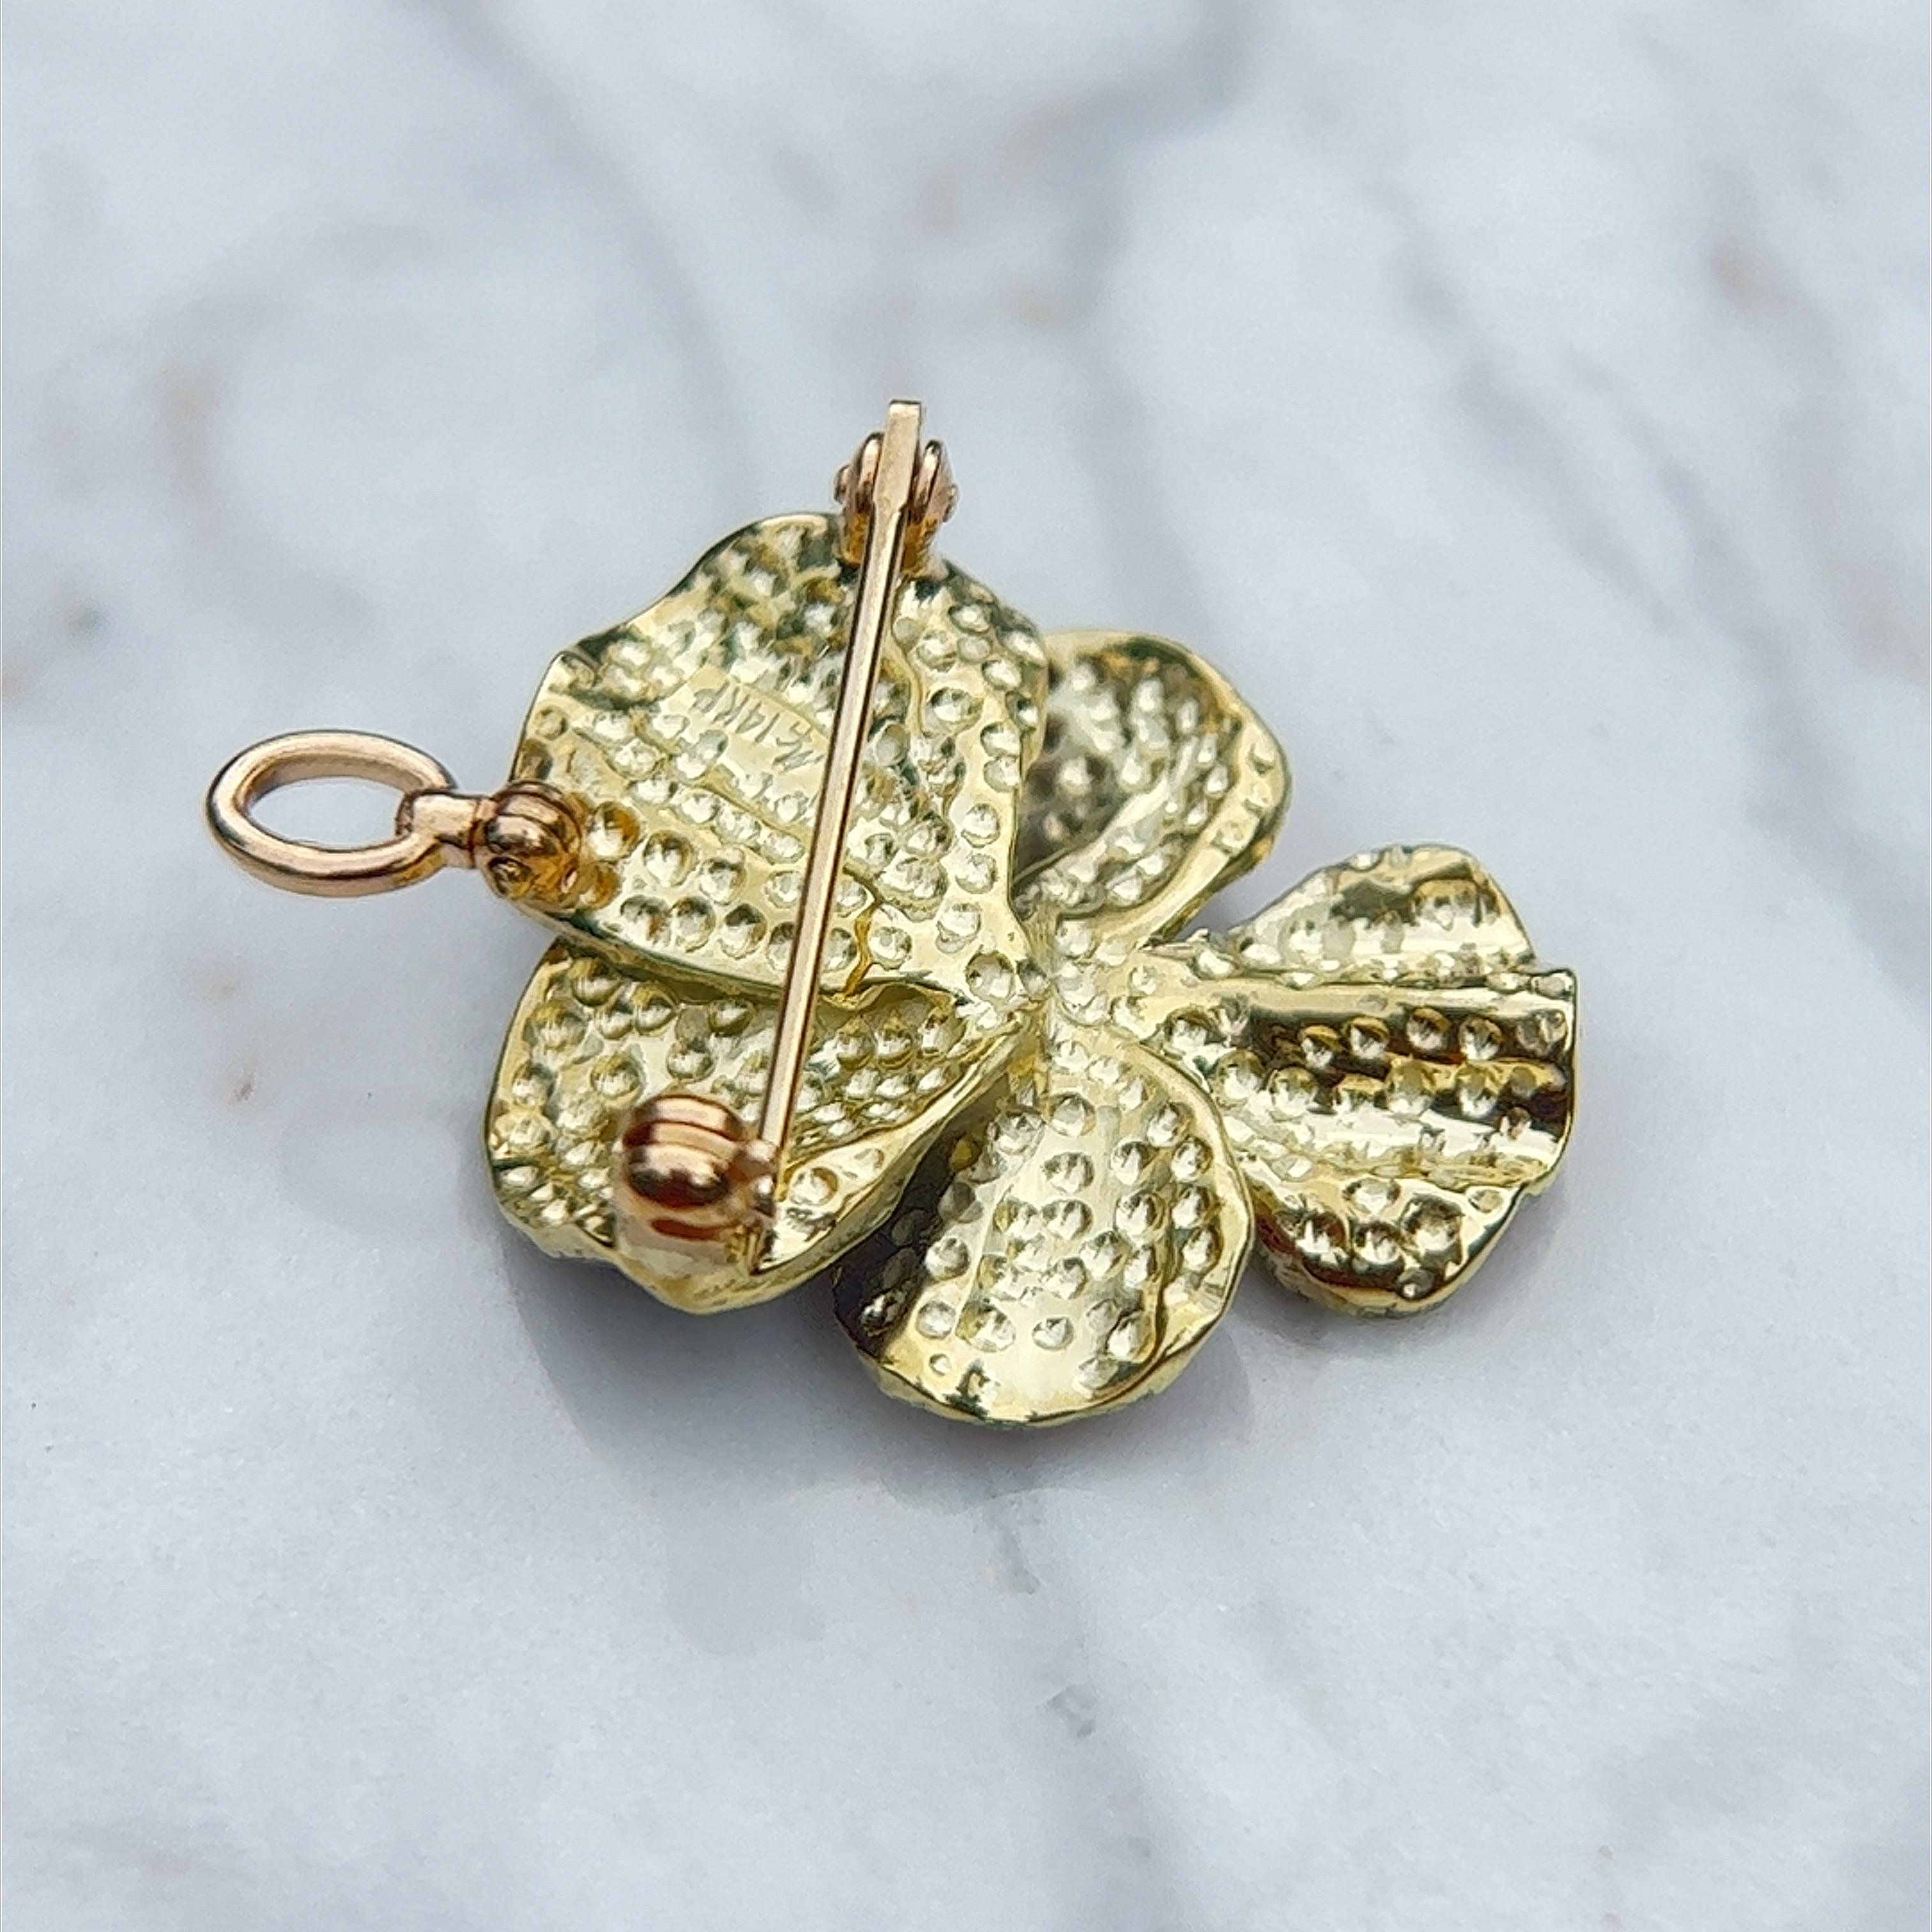 Brilliant Cut Diamond Enamel Pansy Pendant Brooch in 14 Karat Gold 